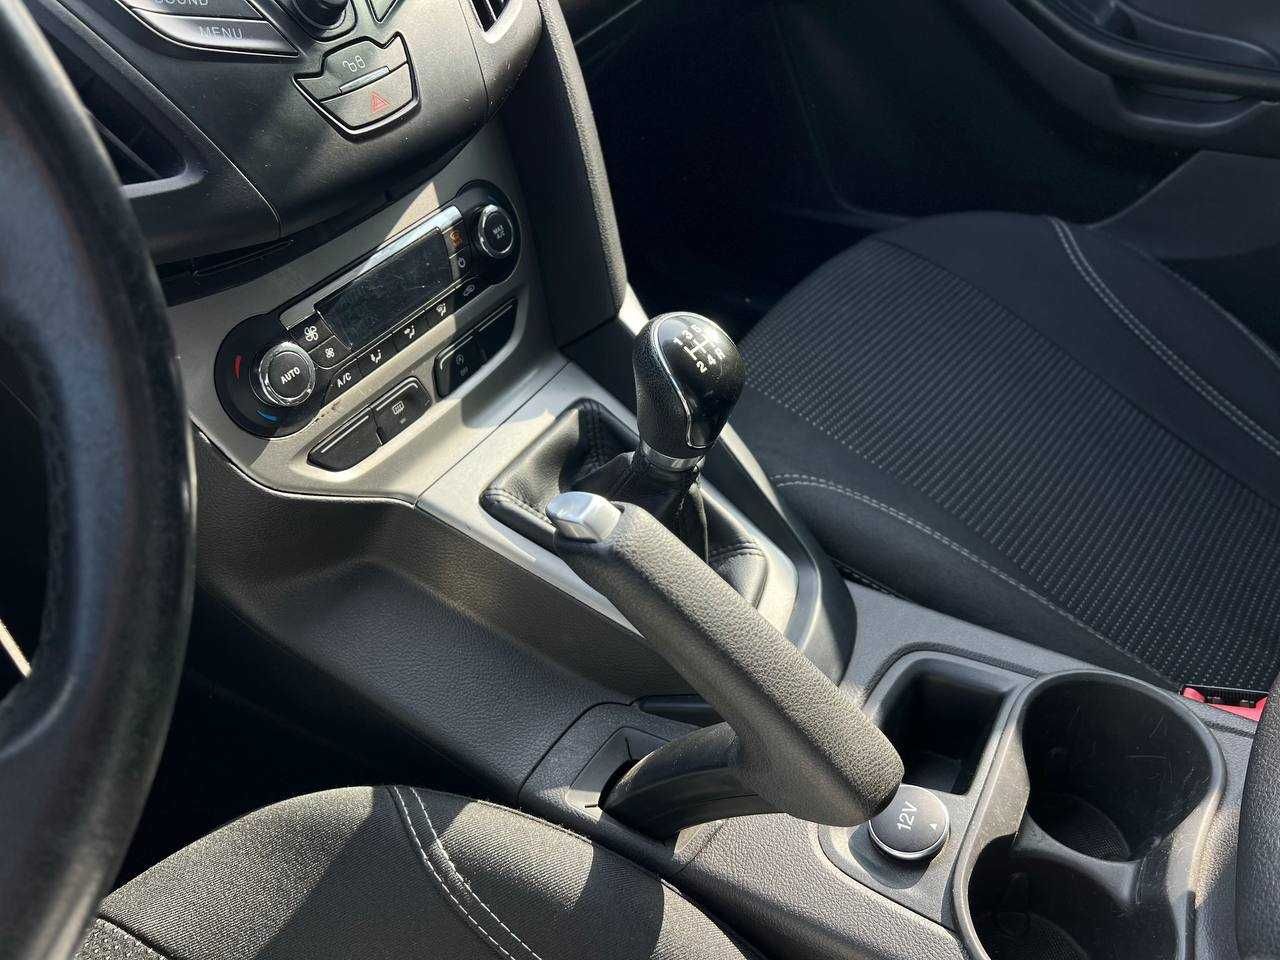 Ford Focus 1.6 2013